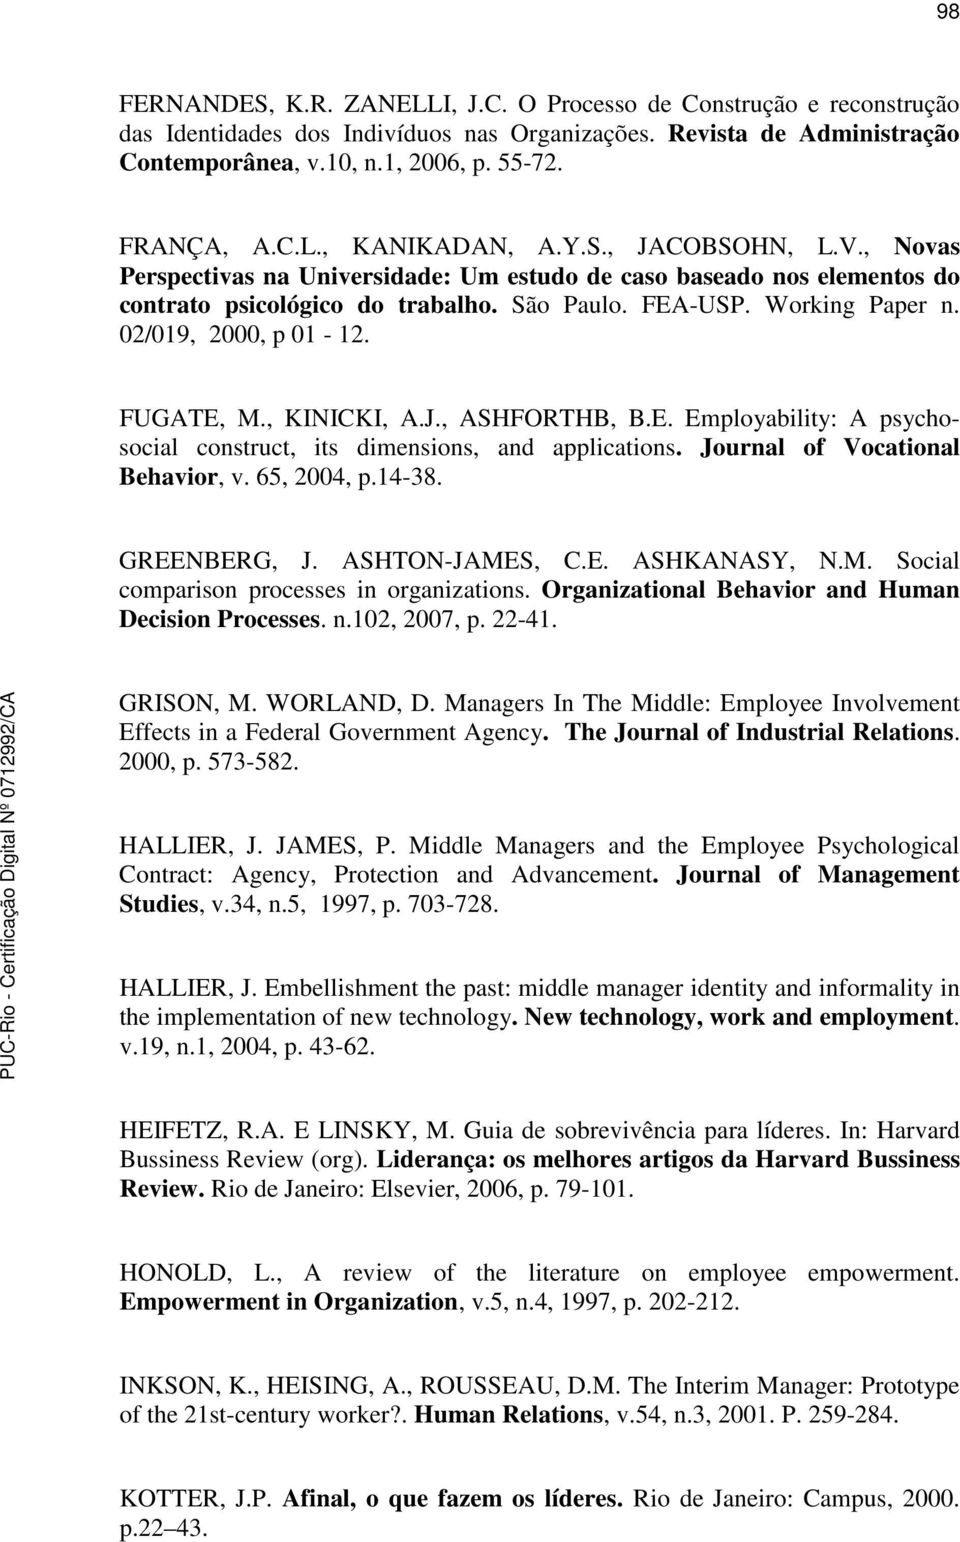 02/019, 2000, p 01-12. FUGATE, M., KINICKI, A.J., ASHFORTHB, B.E. Employability: A psychosocial construct, its dimensions, and applications. Journal of Vocational Behavior, v. 65, 2004, p.14-38.